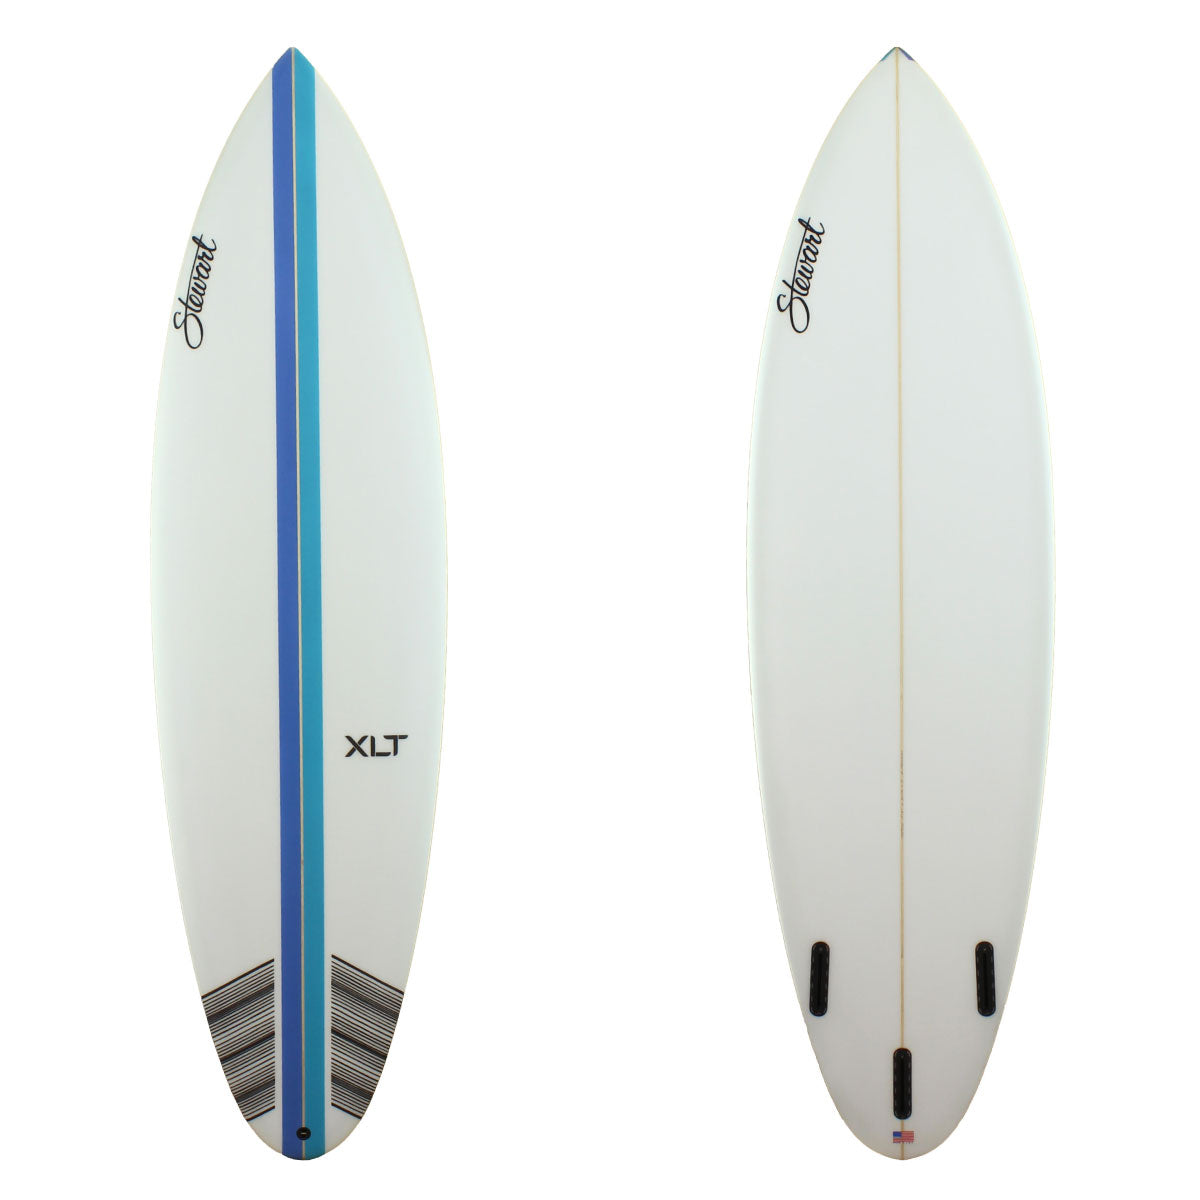 Stewart Surfboards 7'2" XLT shortboard with a dark blue and a light blue stripe on deck